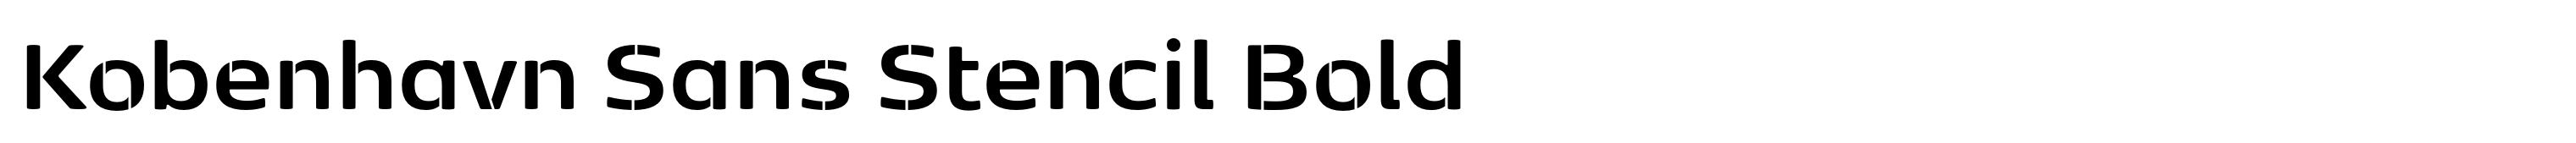 Kobenhavn Sans Stencil Bold